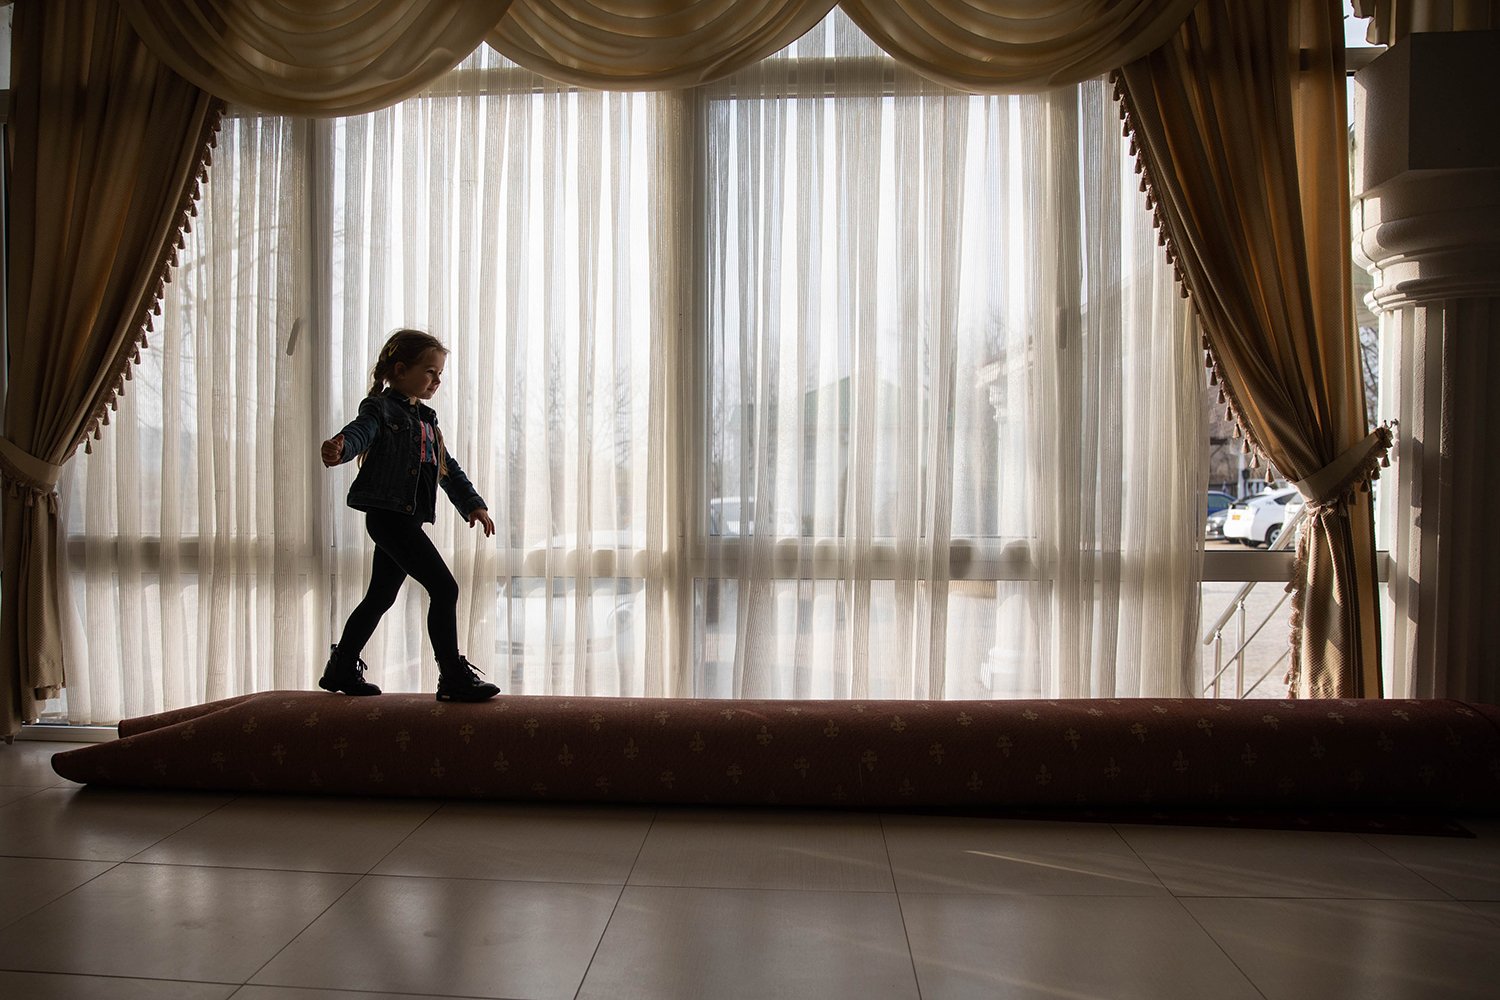 A child plays inside a lobby of La Costesti.